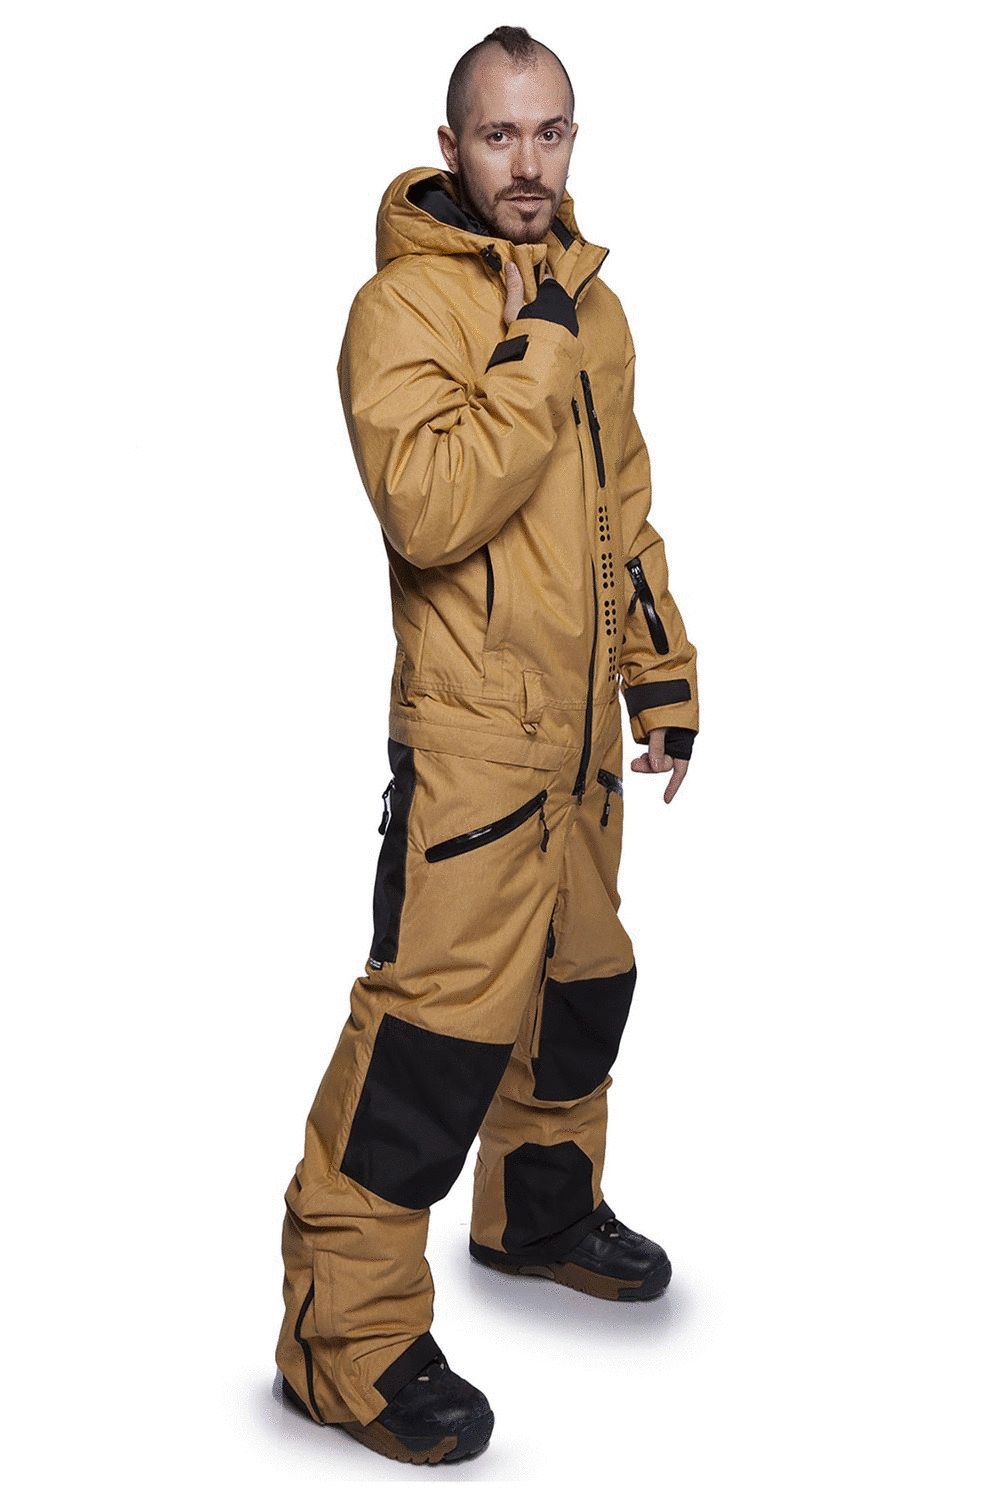 Buy man one piece ski suit 31К10М at snow-point.com